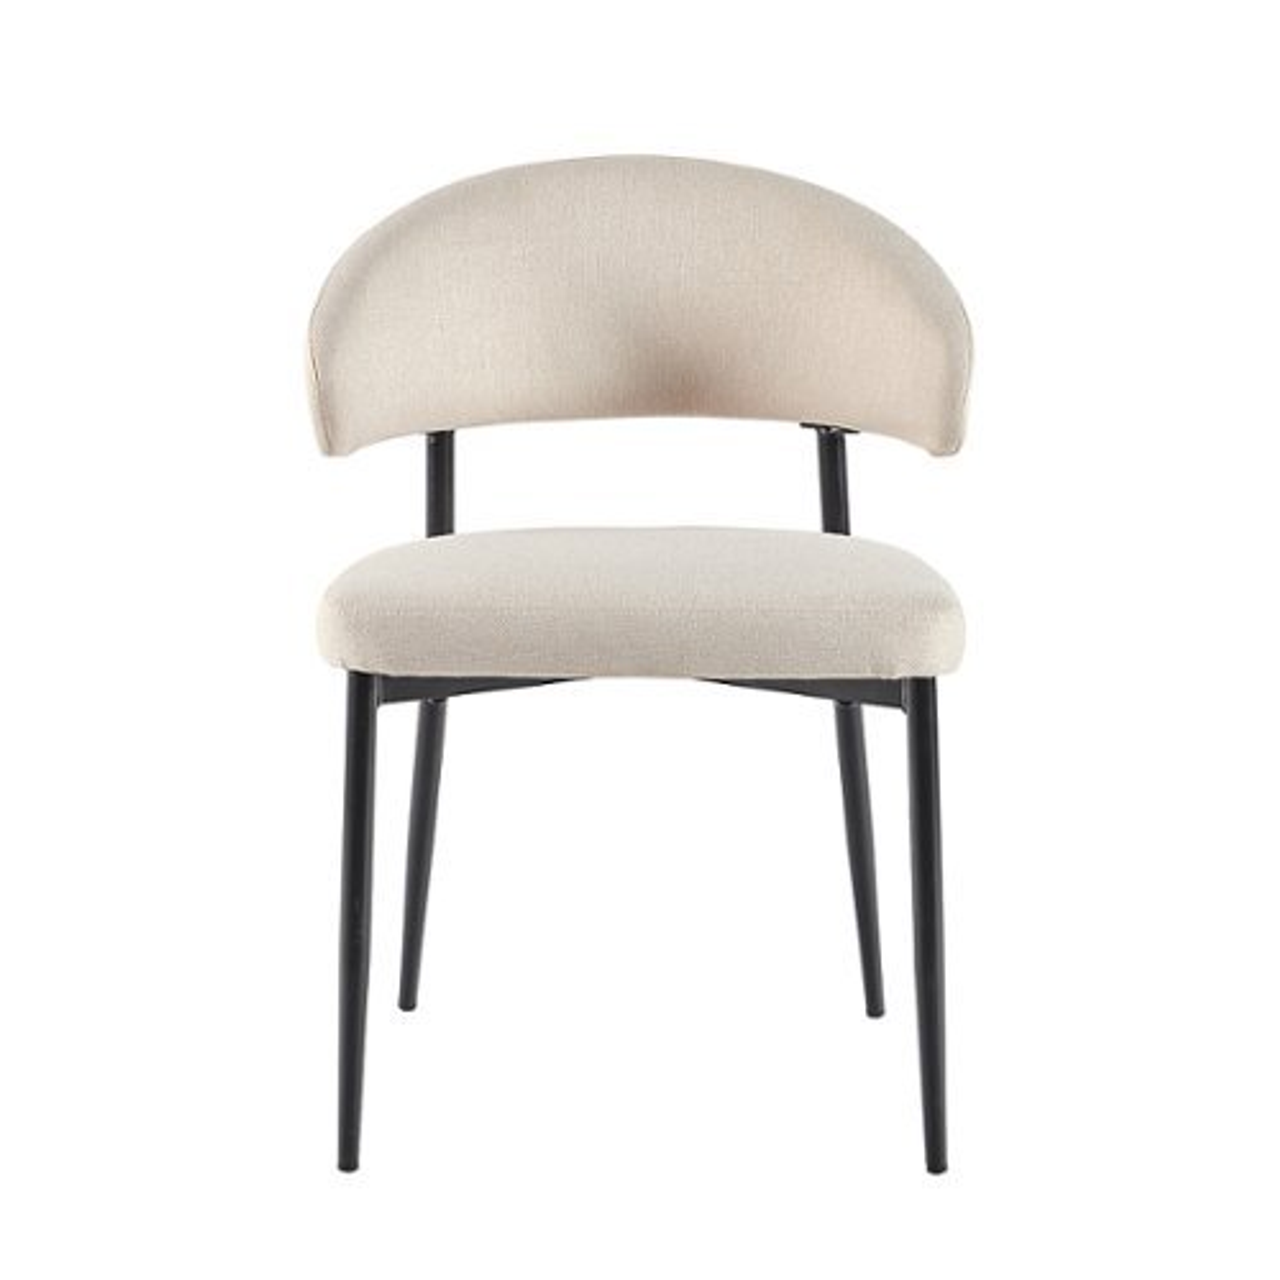 Walker Edison - Modern Curved Back Upholstered Dining Chair (2-Piece Set) - Ivory